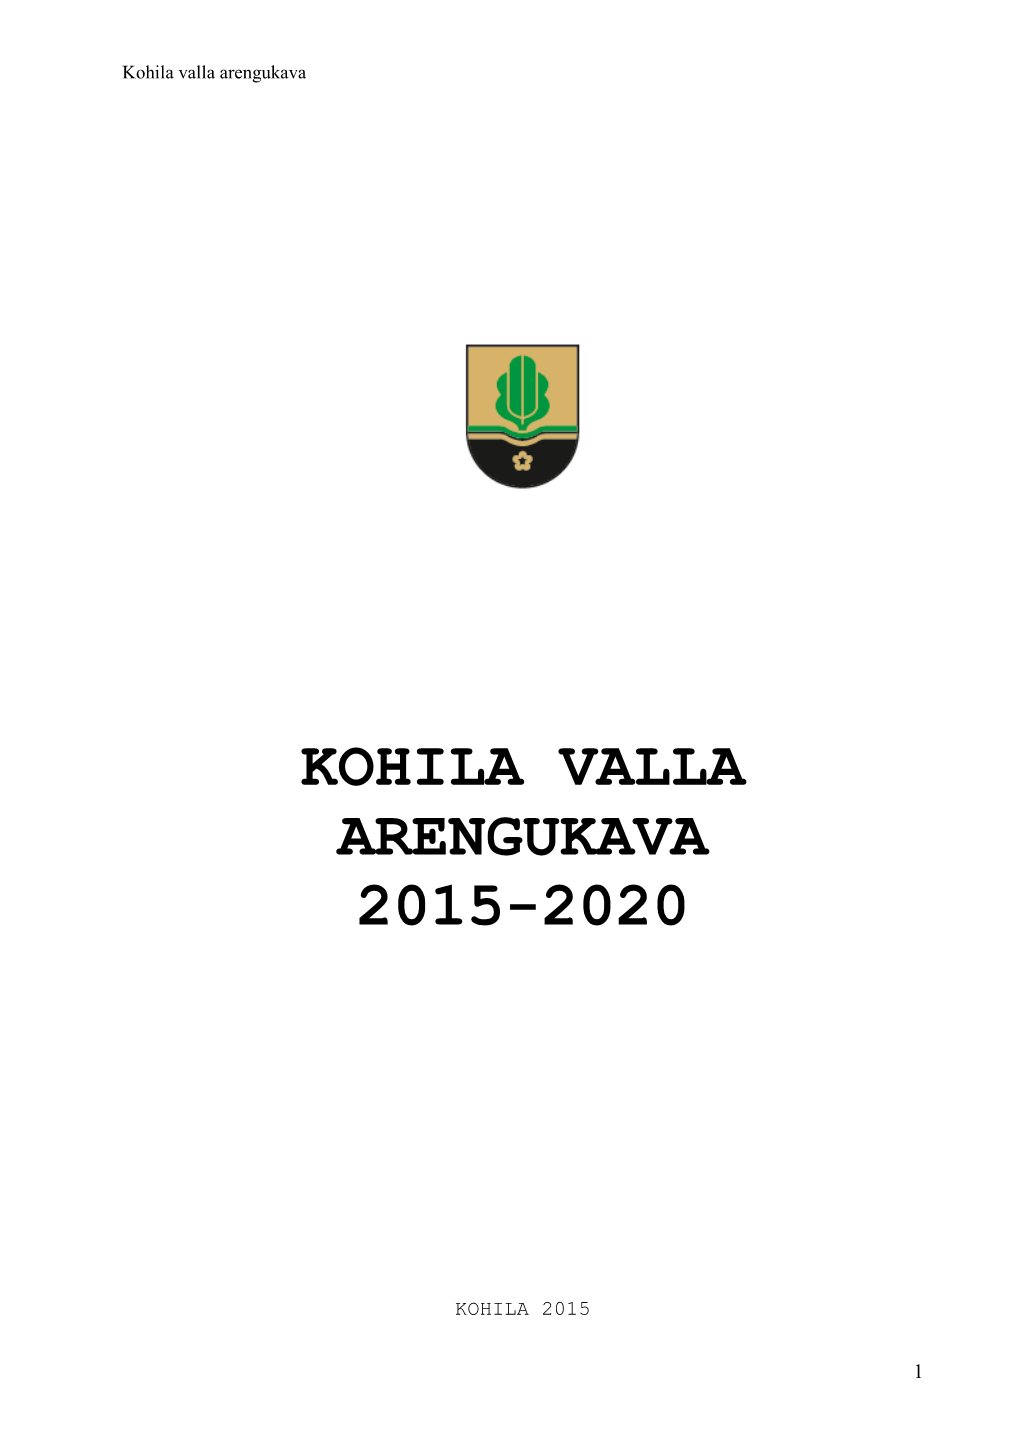 Kohila Valla Arengukava 2015-2020